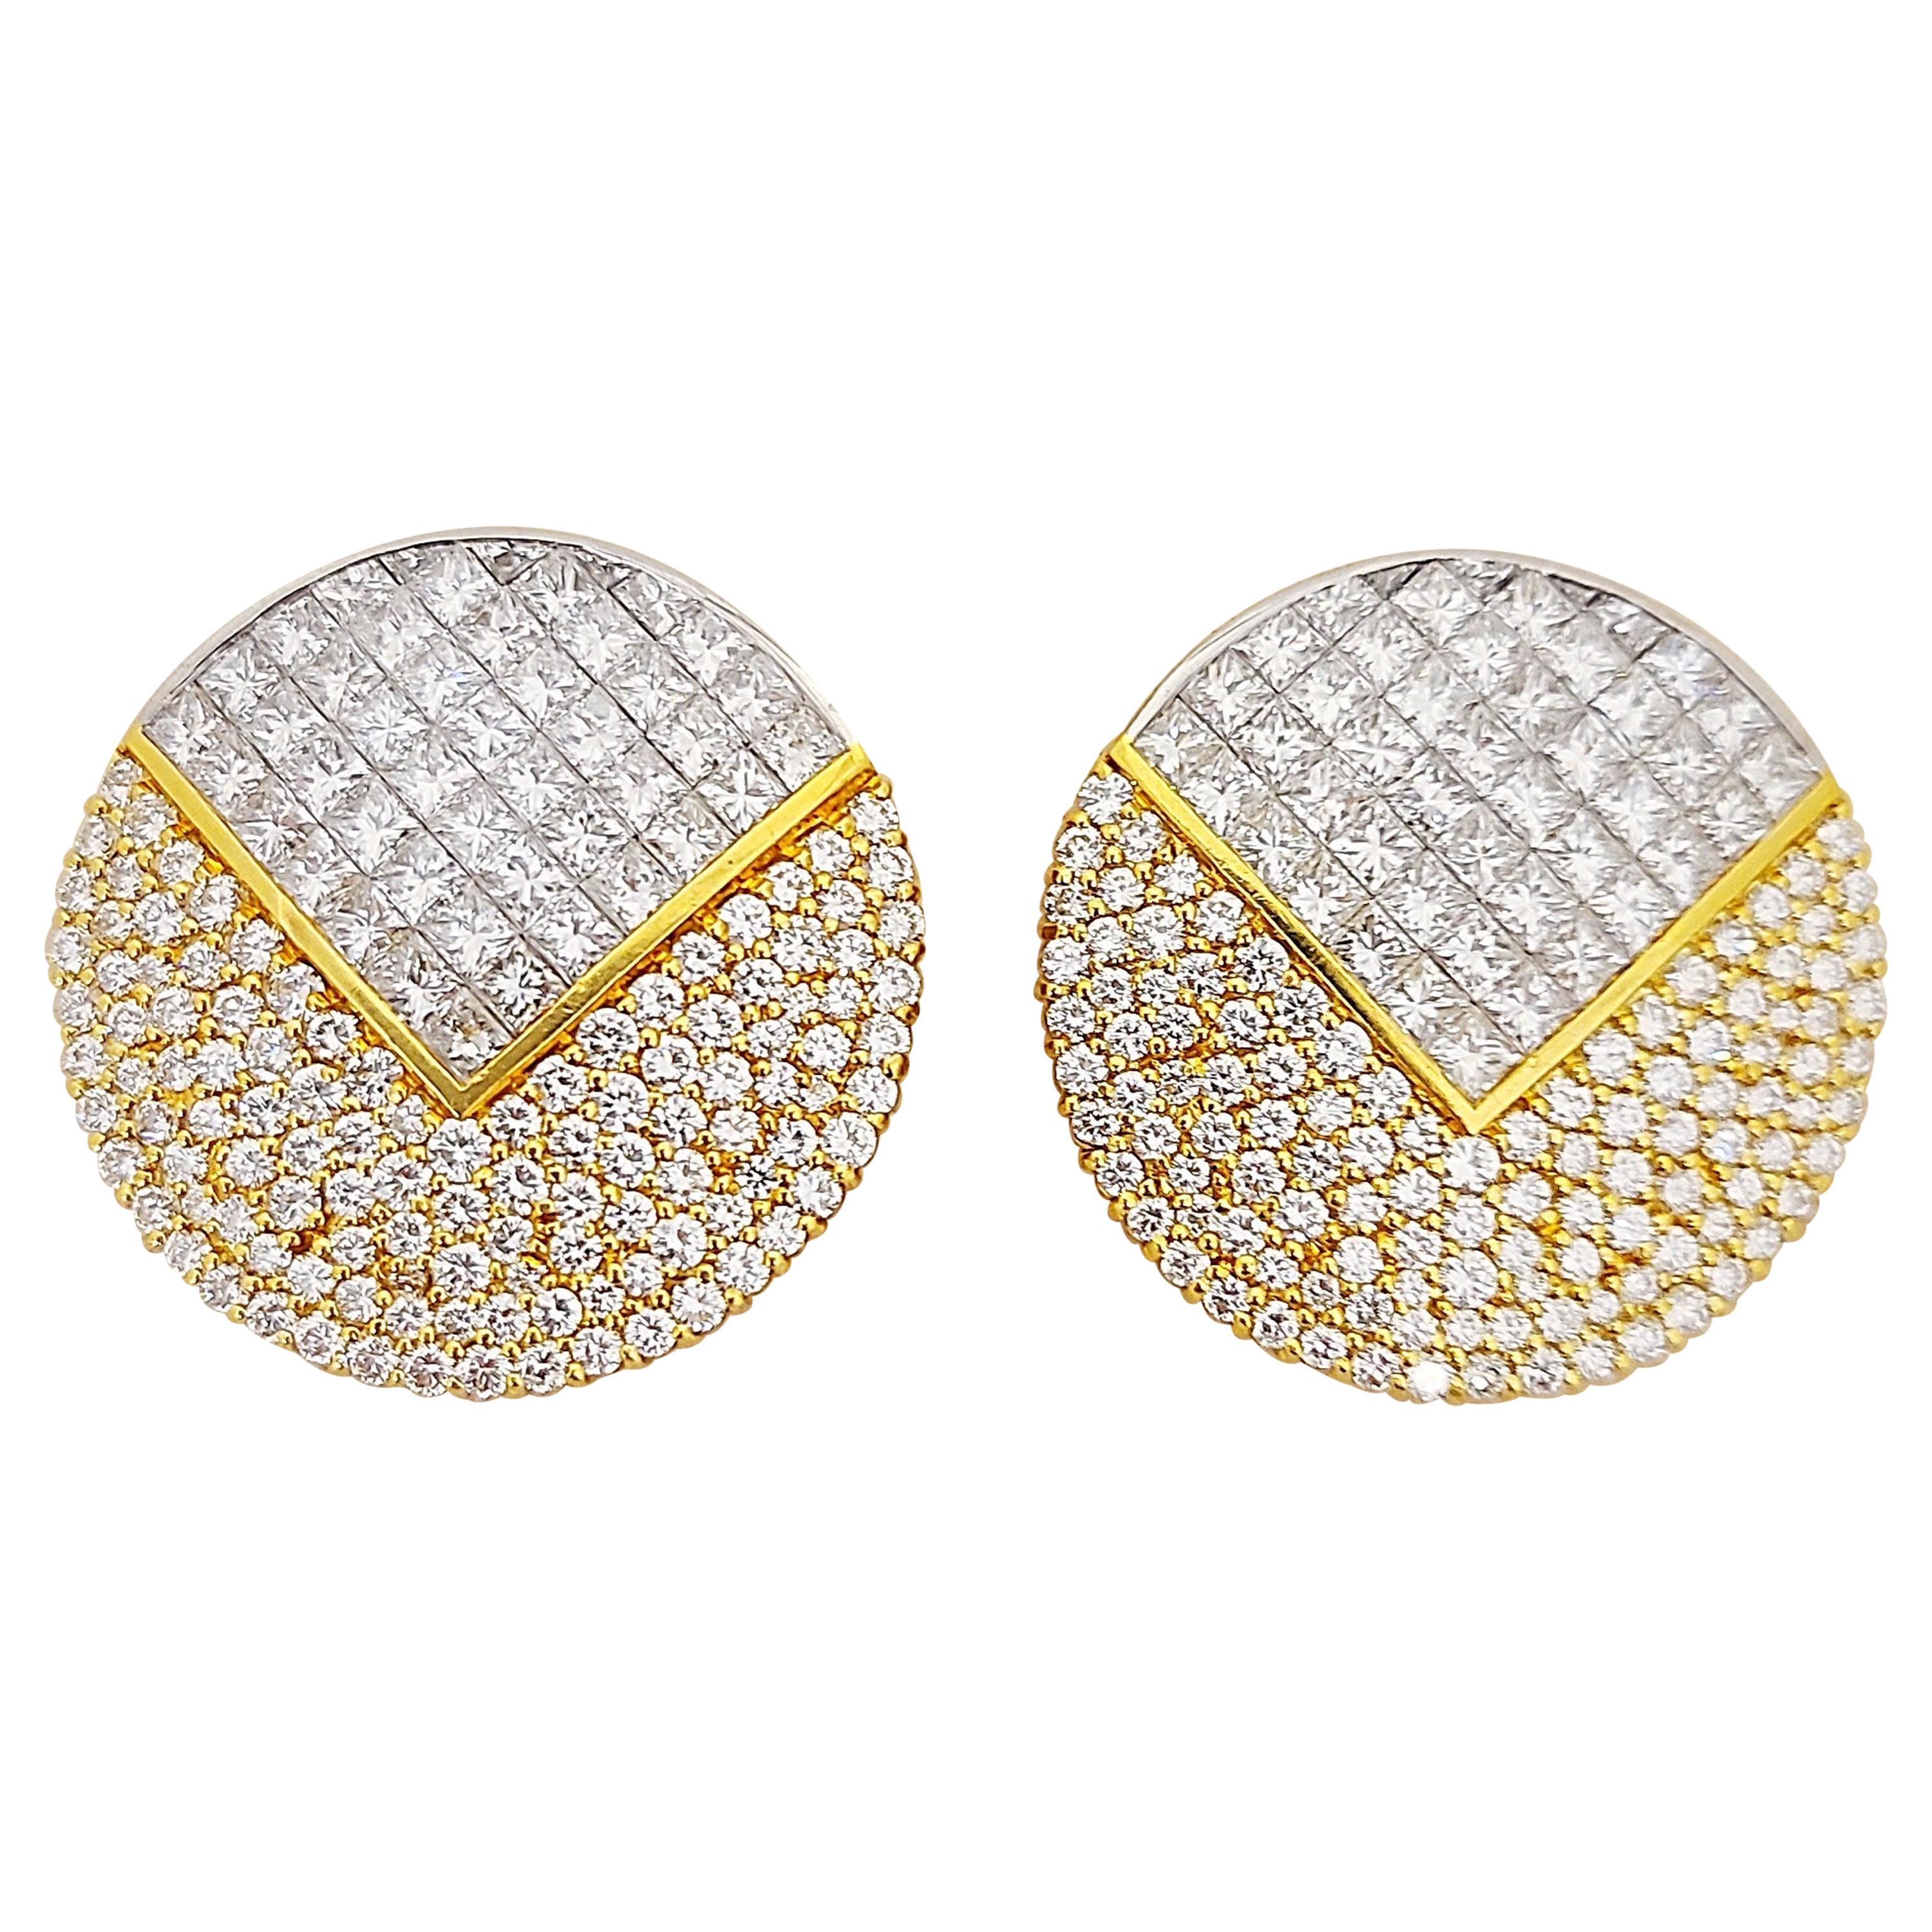 Nova 18 Karat Yellow Gold and Platinum 14.57 Carat Diamond Earrings